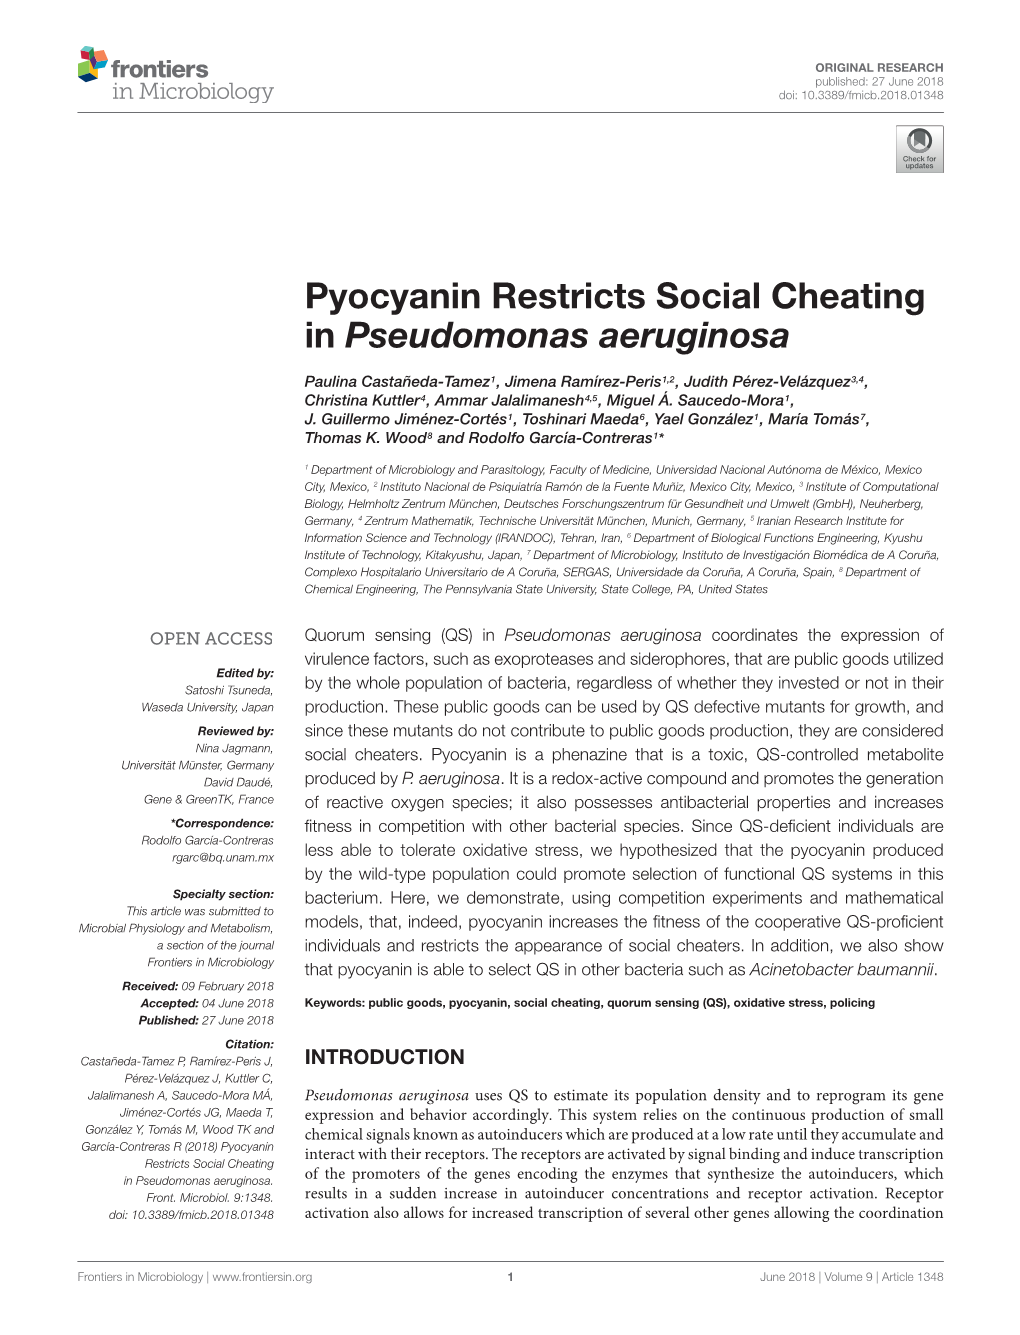 Pyocyanin Restricts Social Cheating in Pseudomonas Aeruginosa